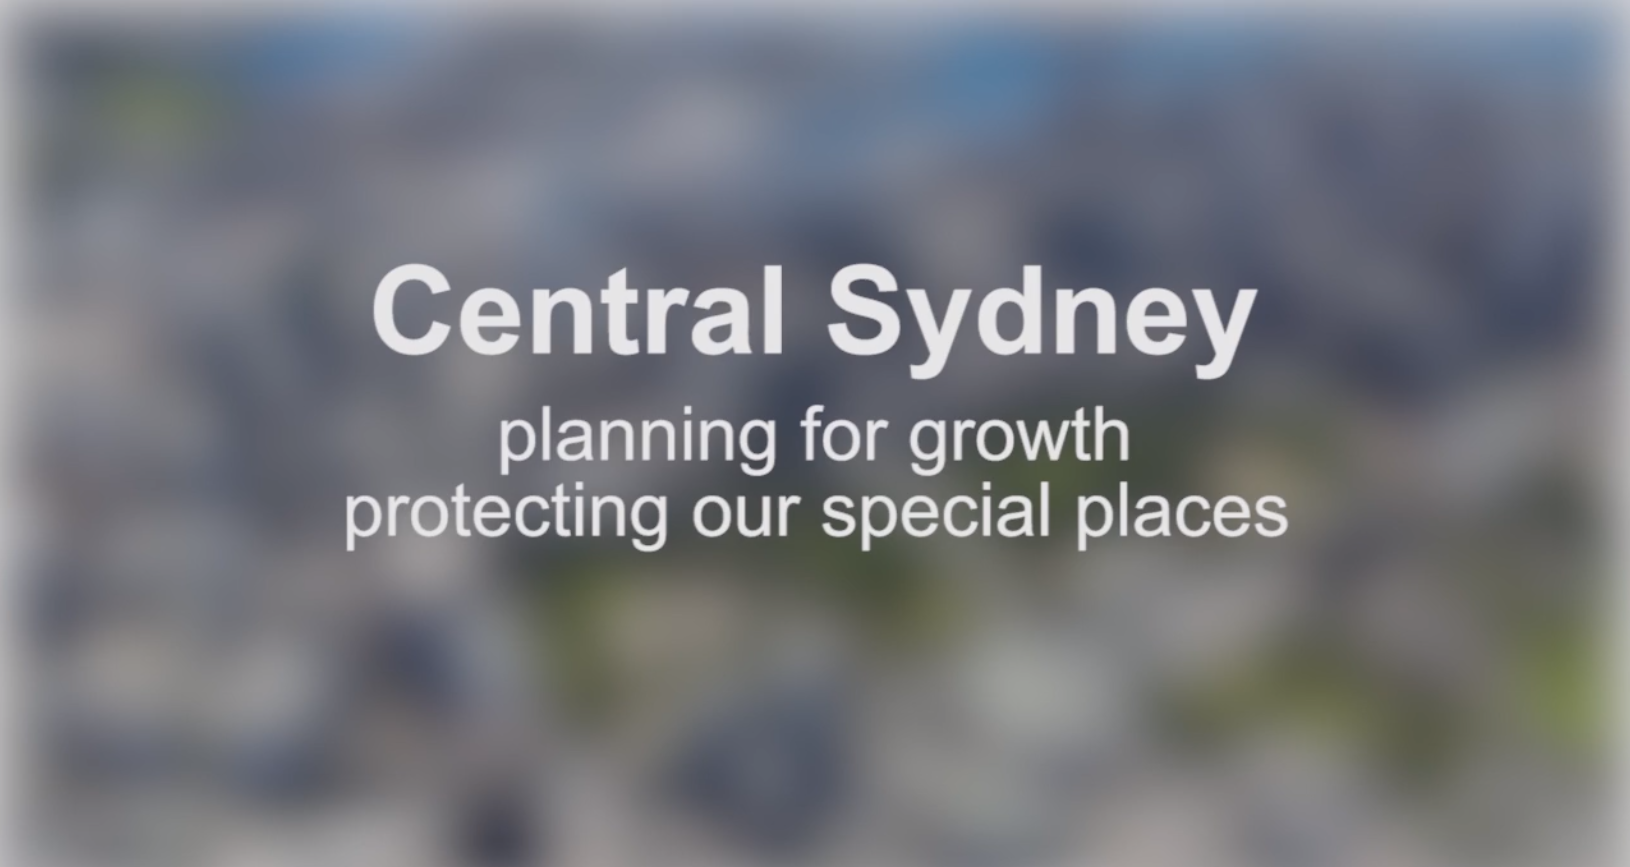 Central Sydney image for video